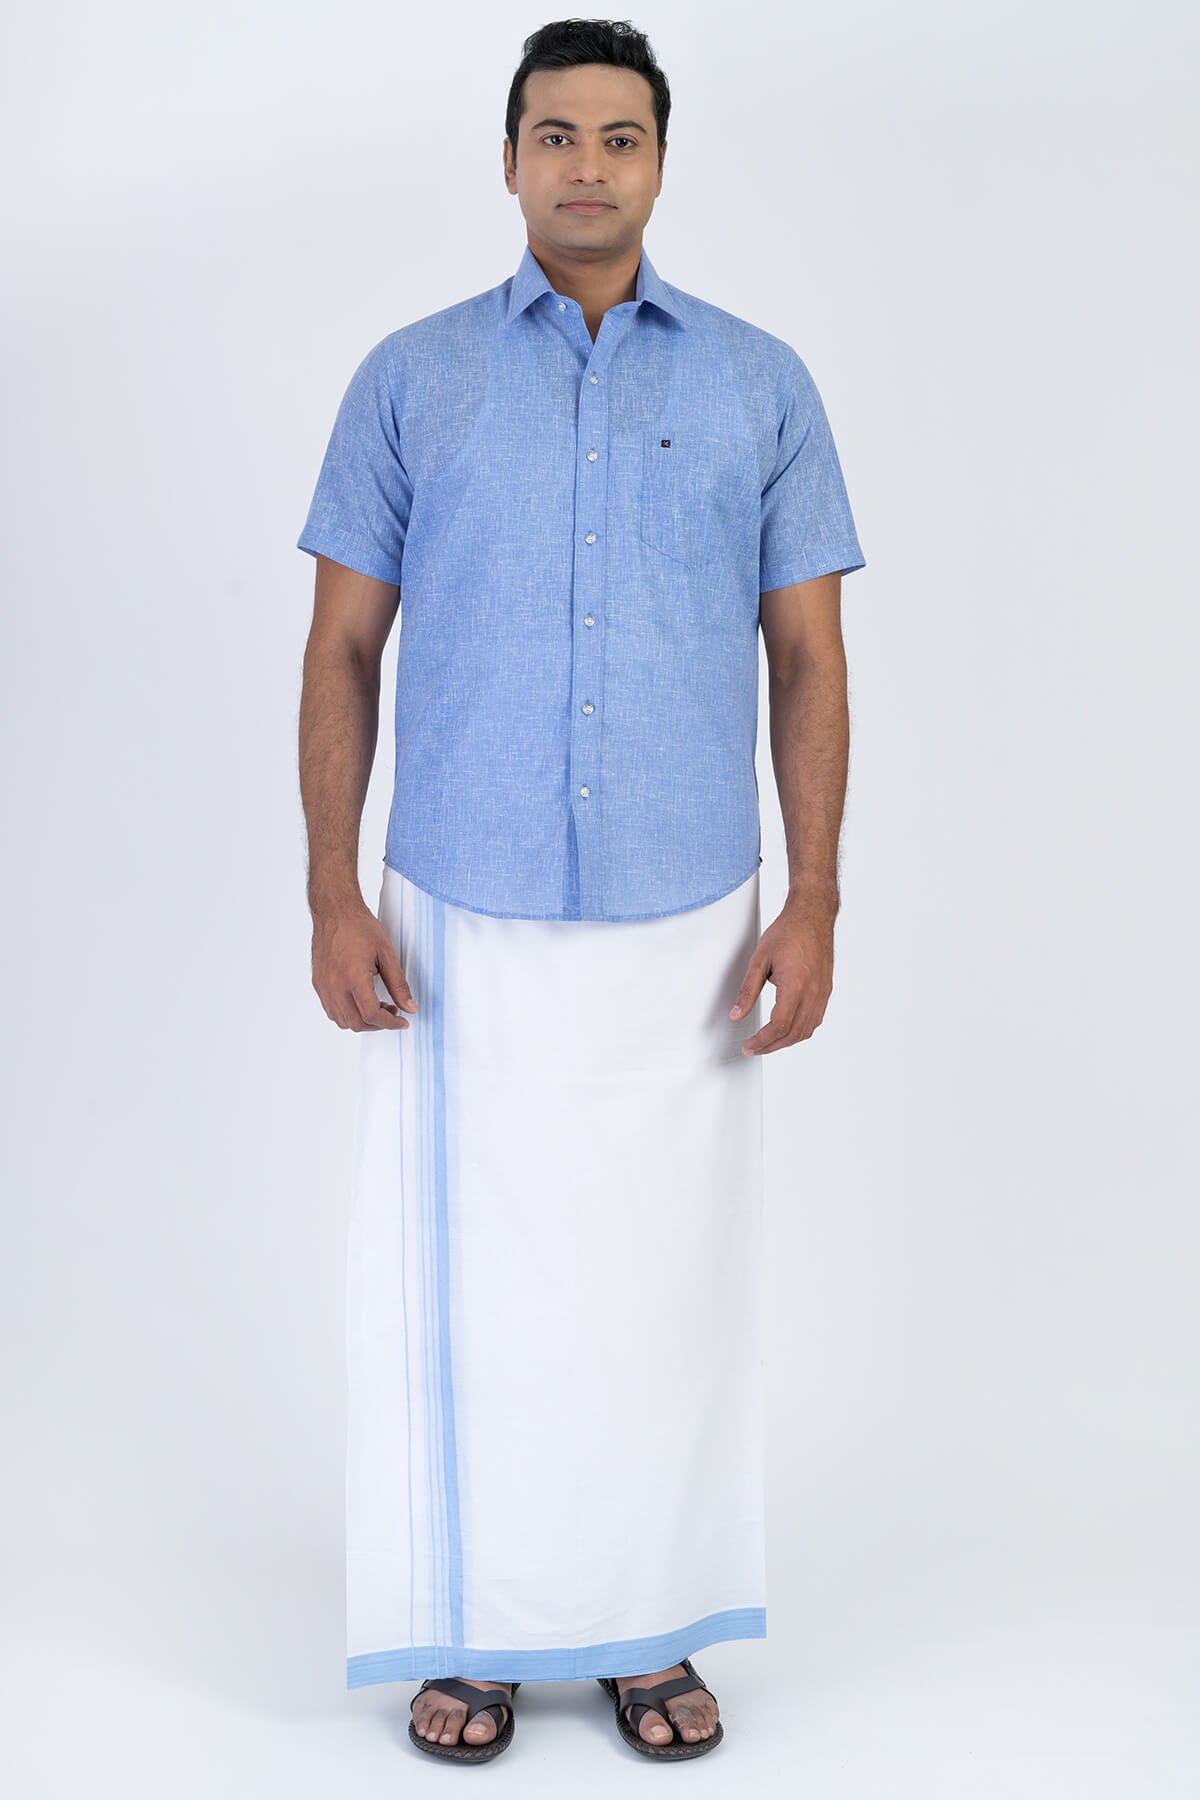 Men's Premium Cotton Dhoti with Sky Blue Elegant Border